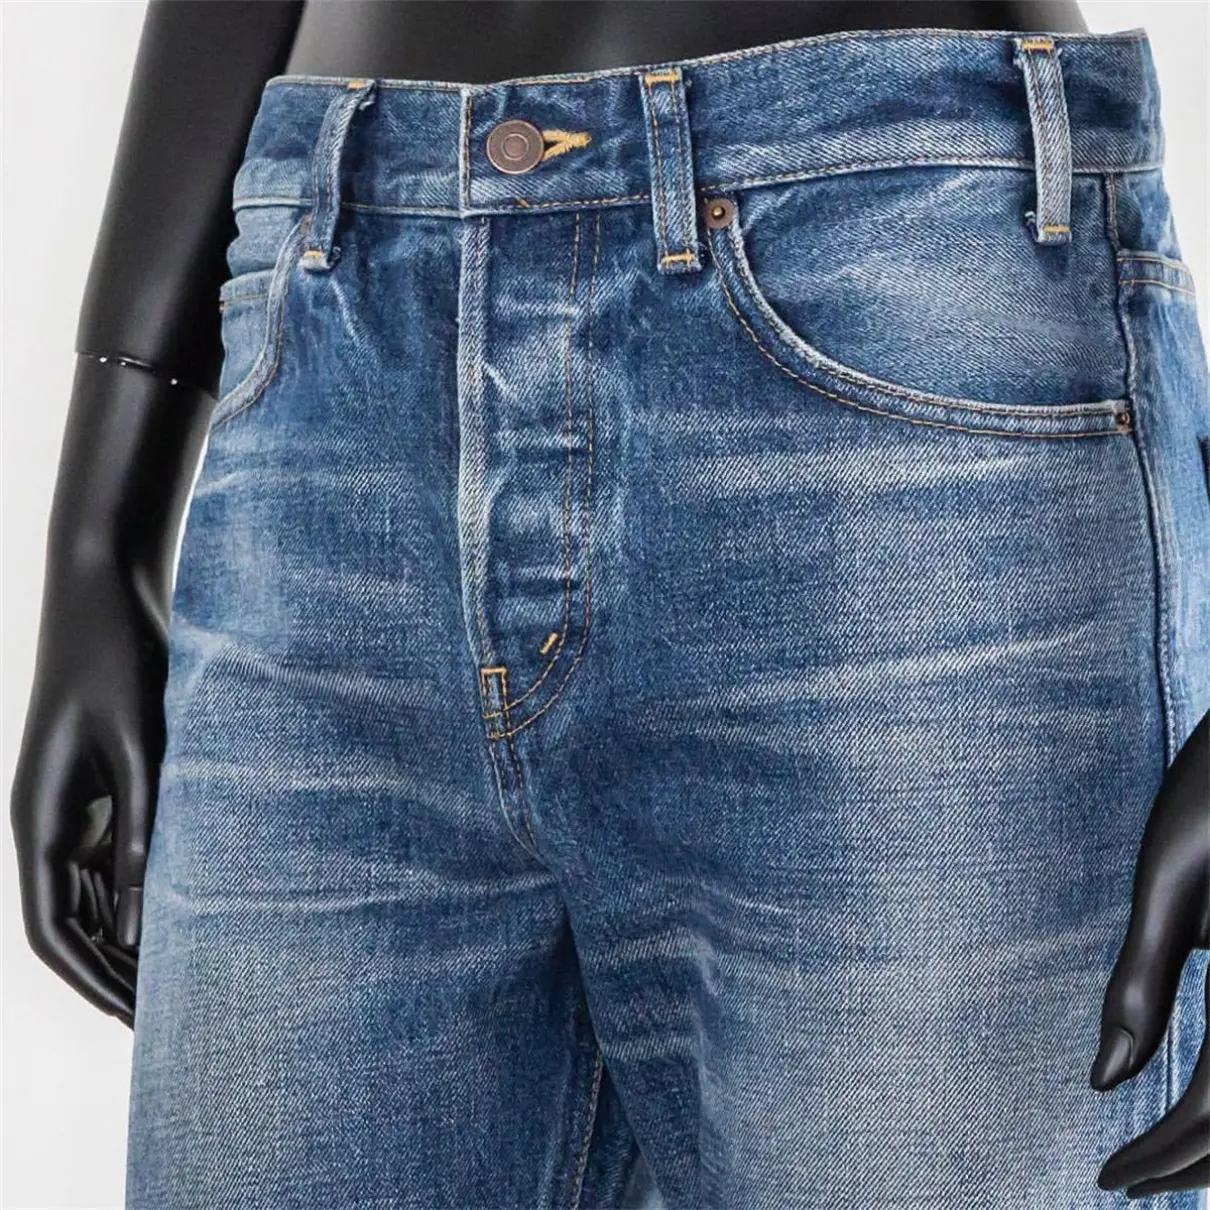 Buy Celine Jeans online